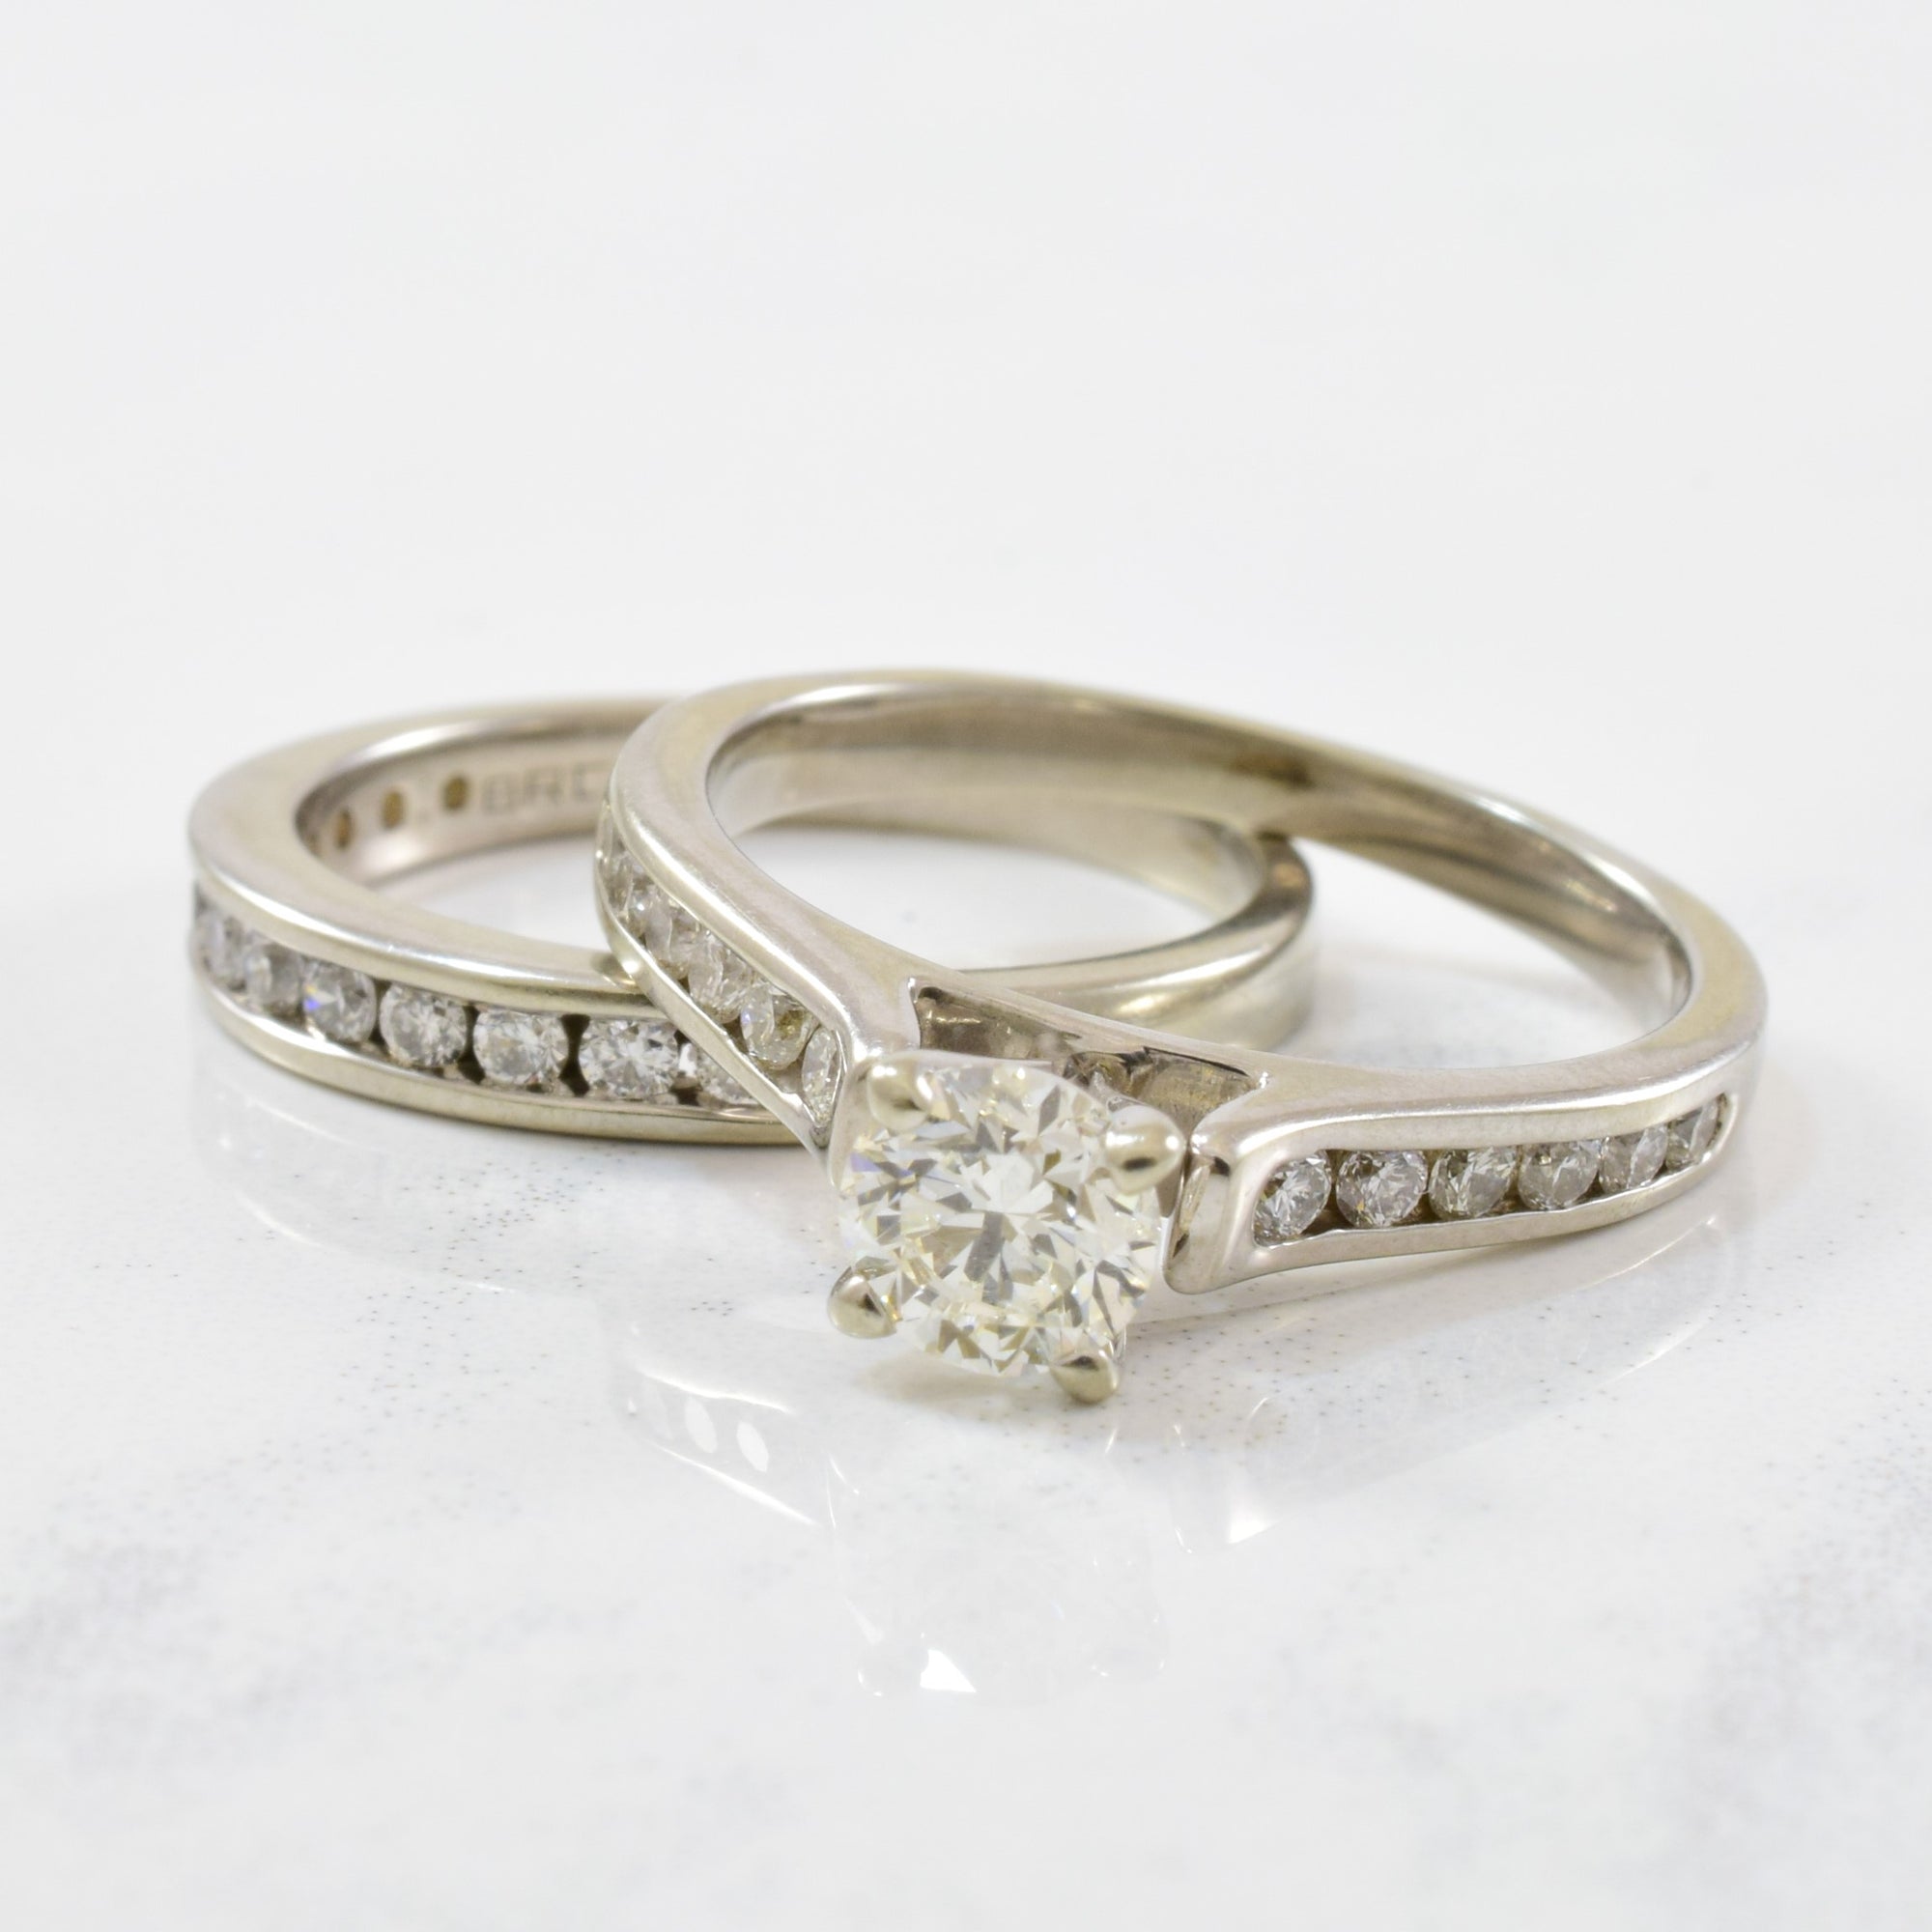 Spence Diamonds' Round Brilliant Diamond Wedding Set | 0.98ctw | SZ 6.5 |